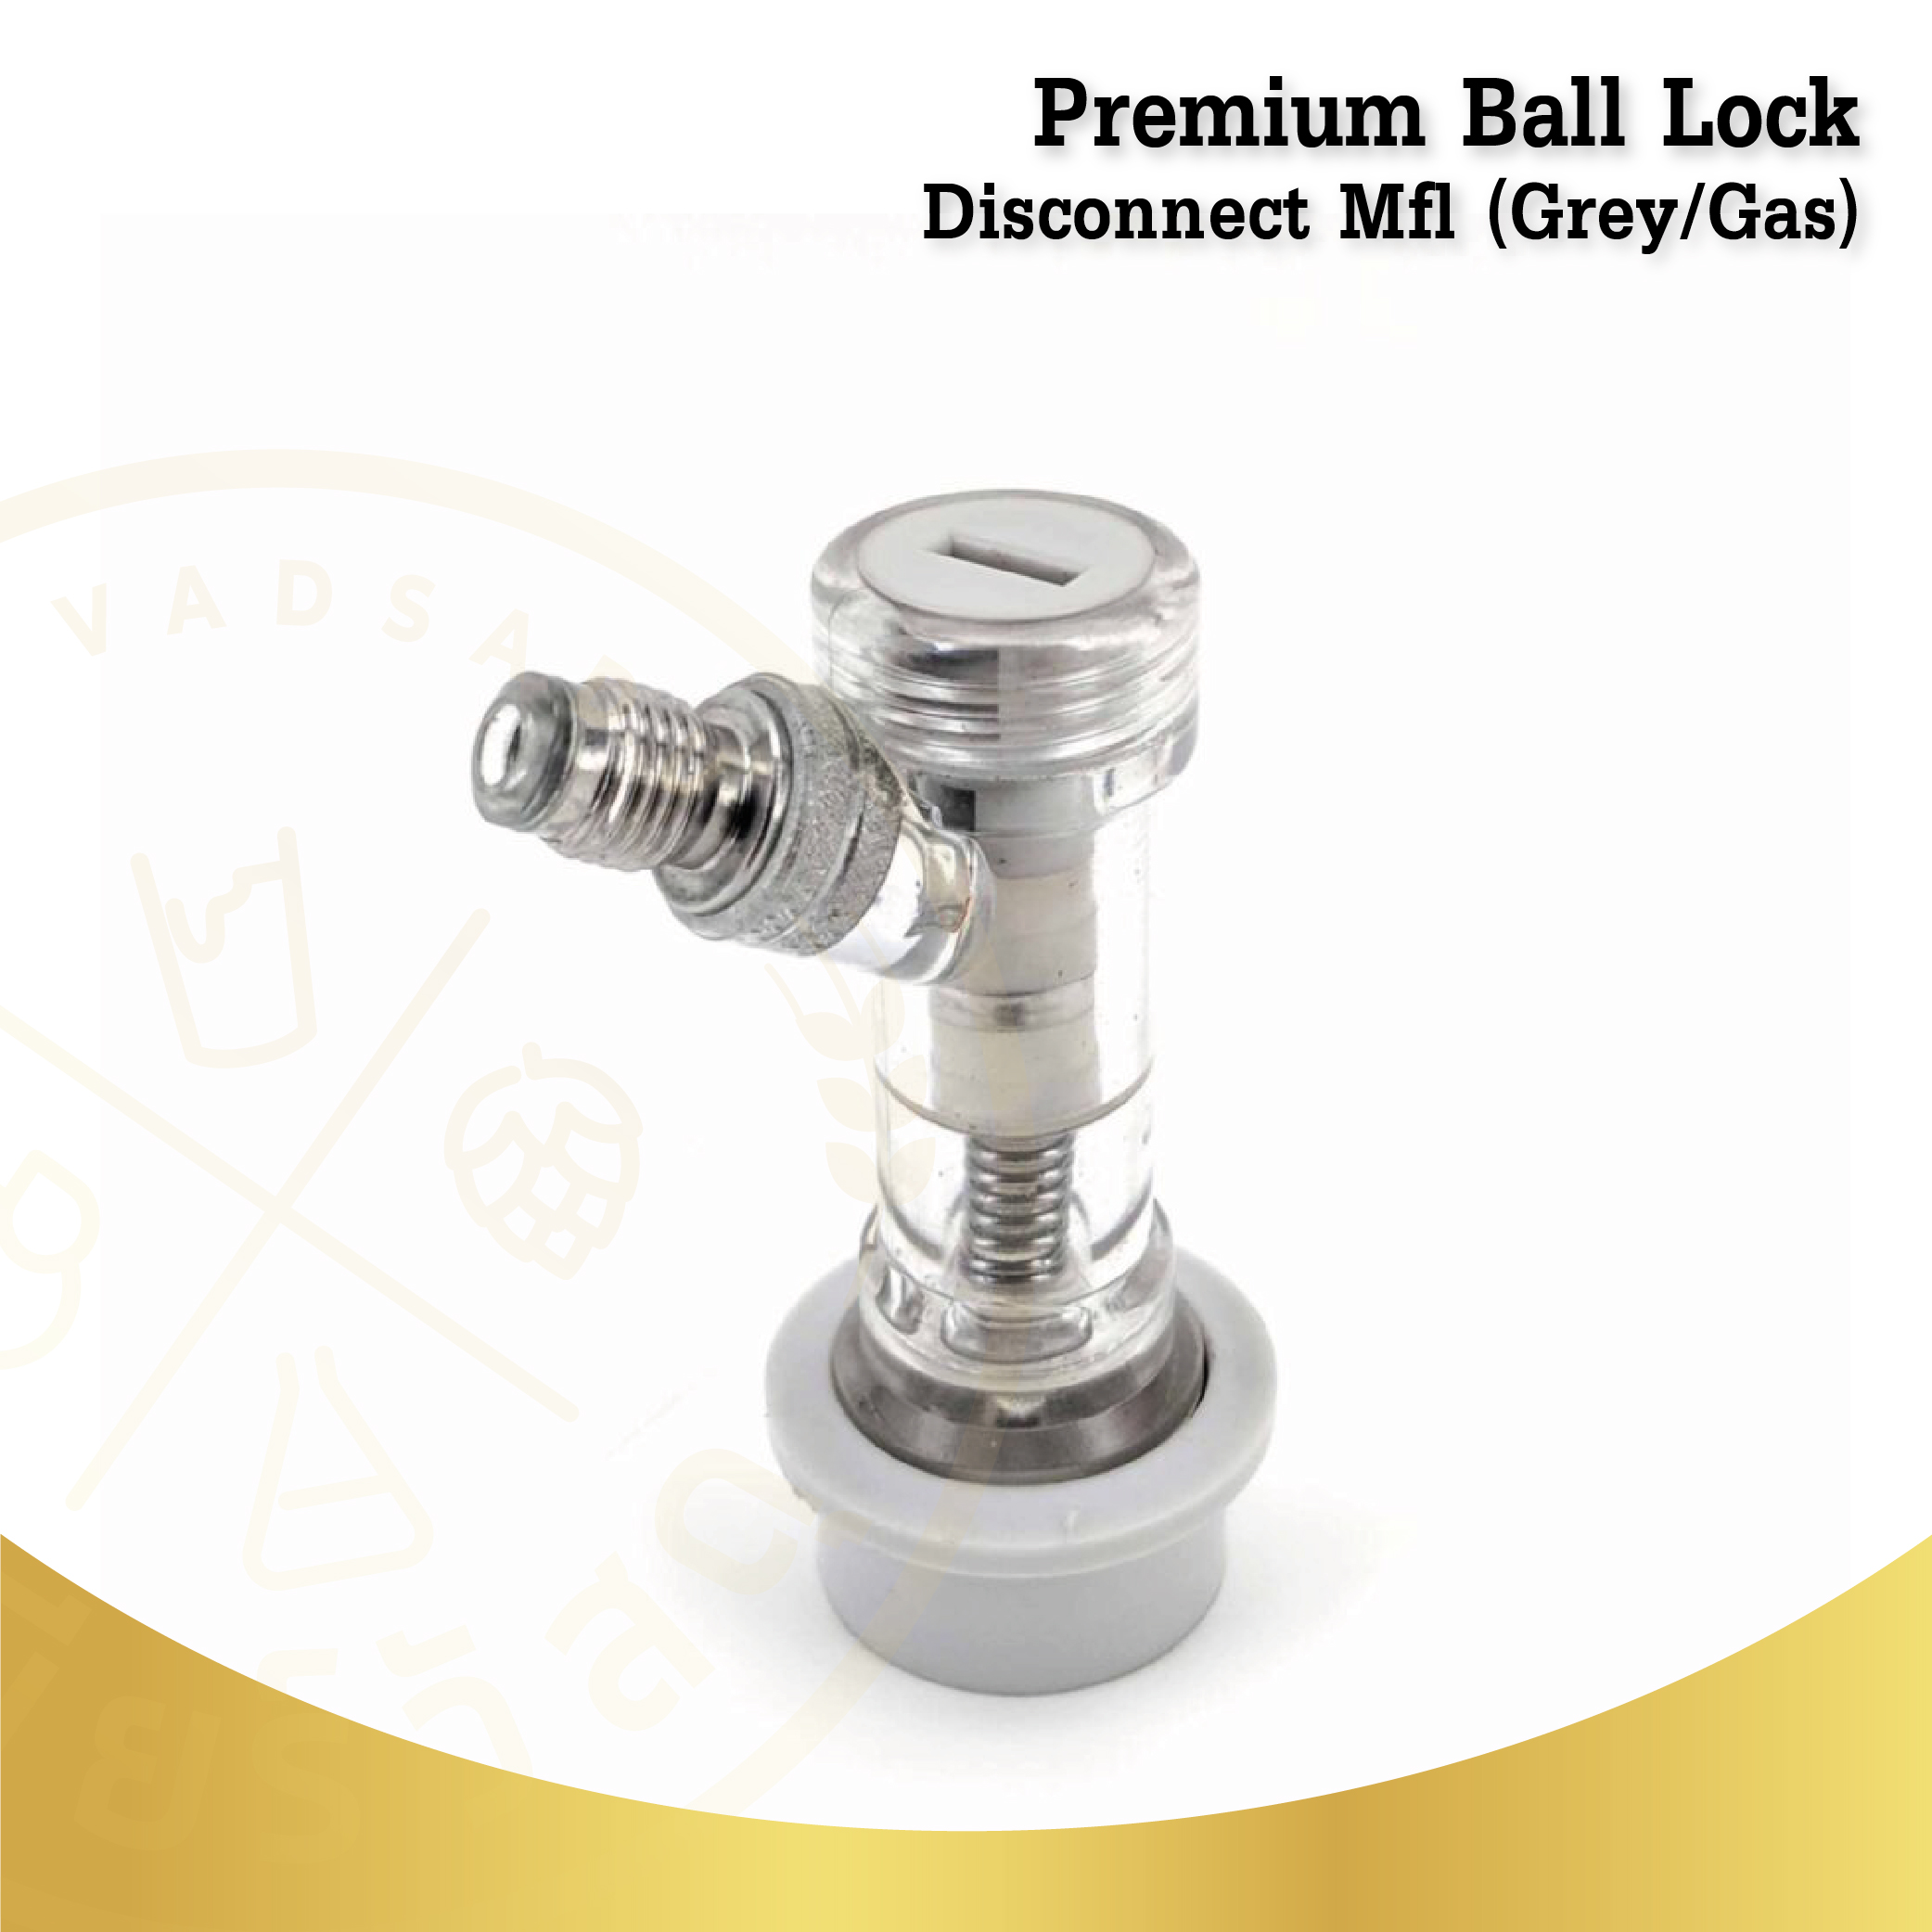 Premium Ball Lock Disconnect Mfl (Grey/Gas)